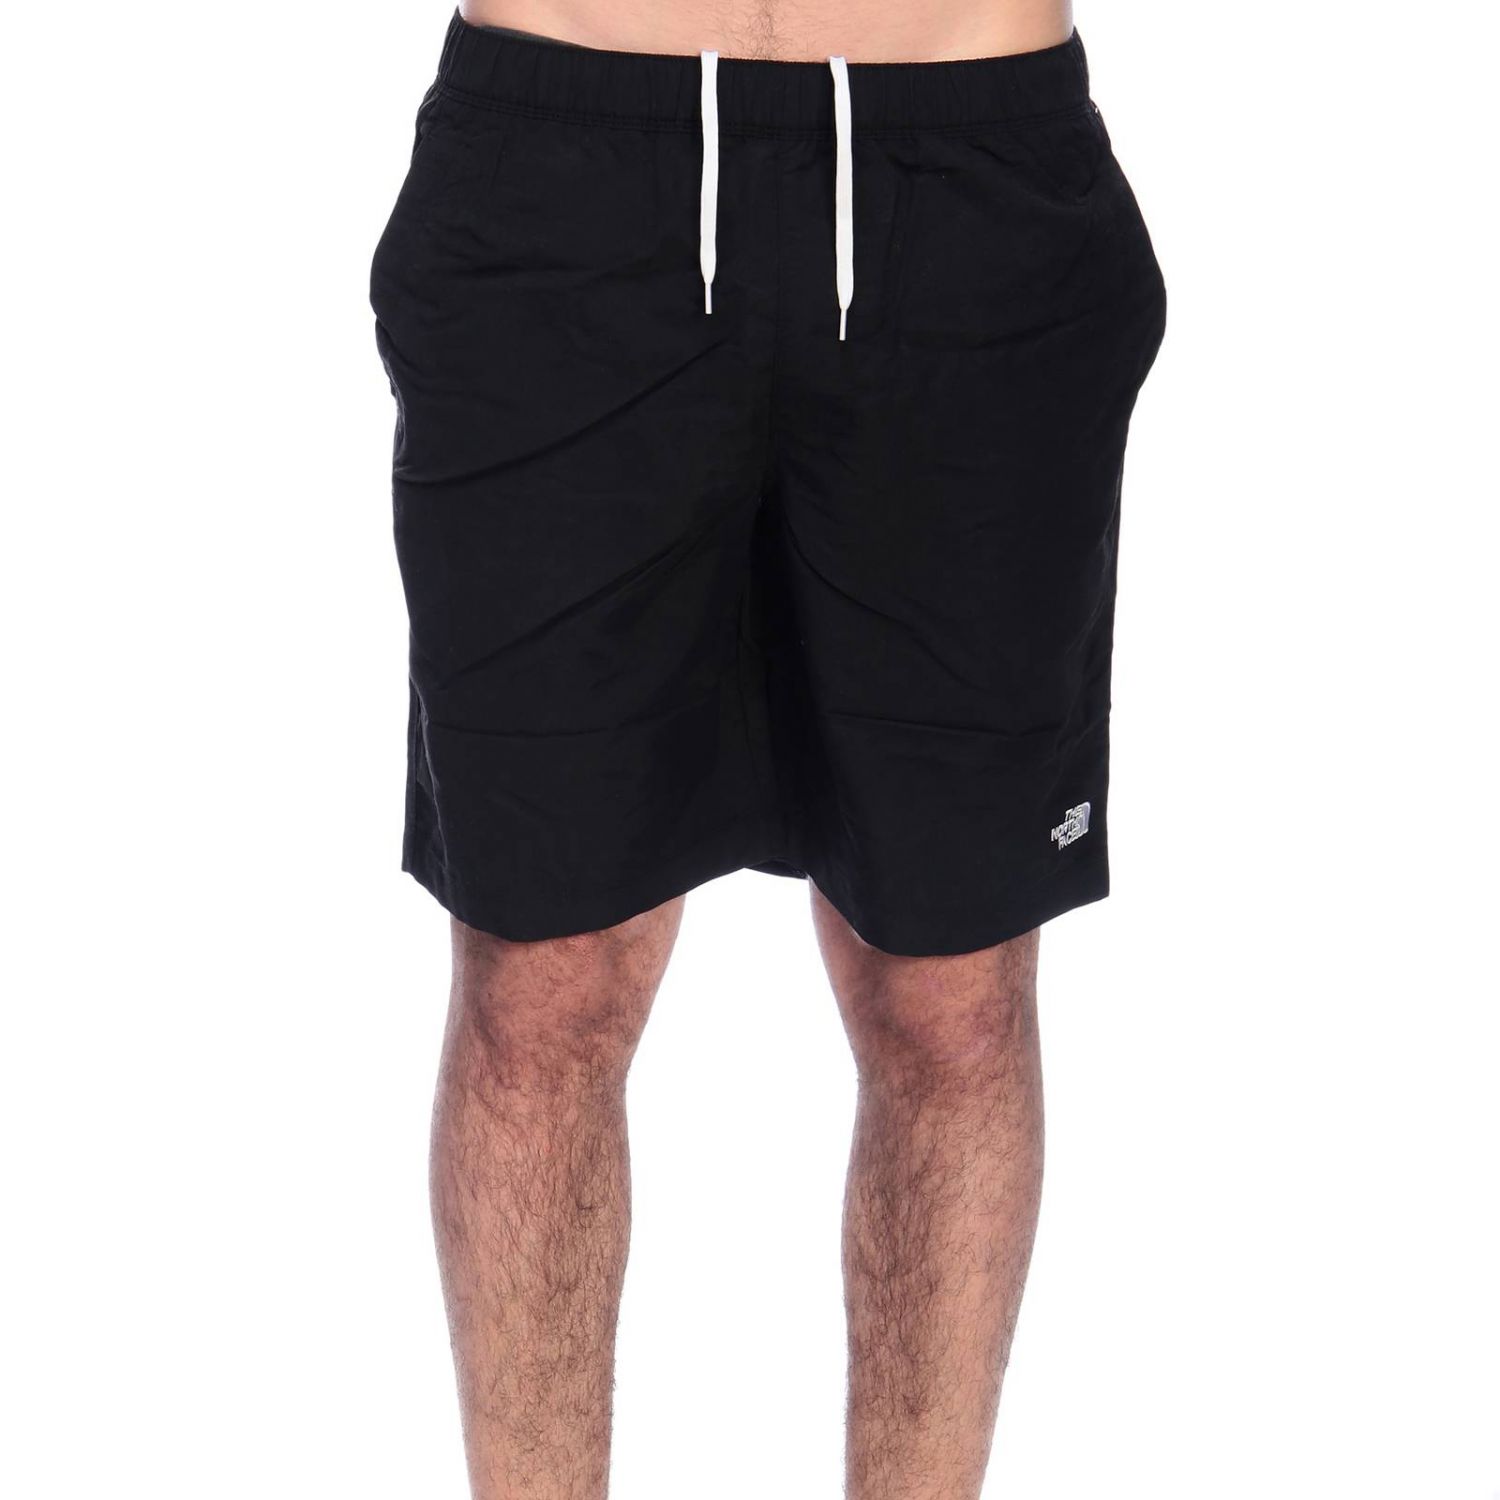 northface shorts men